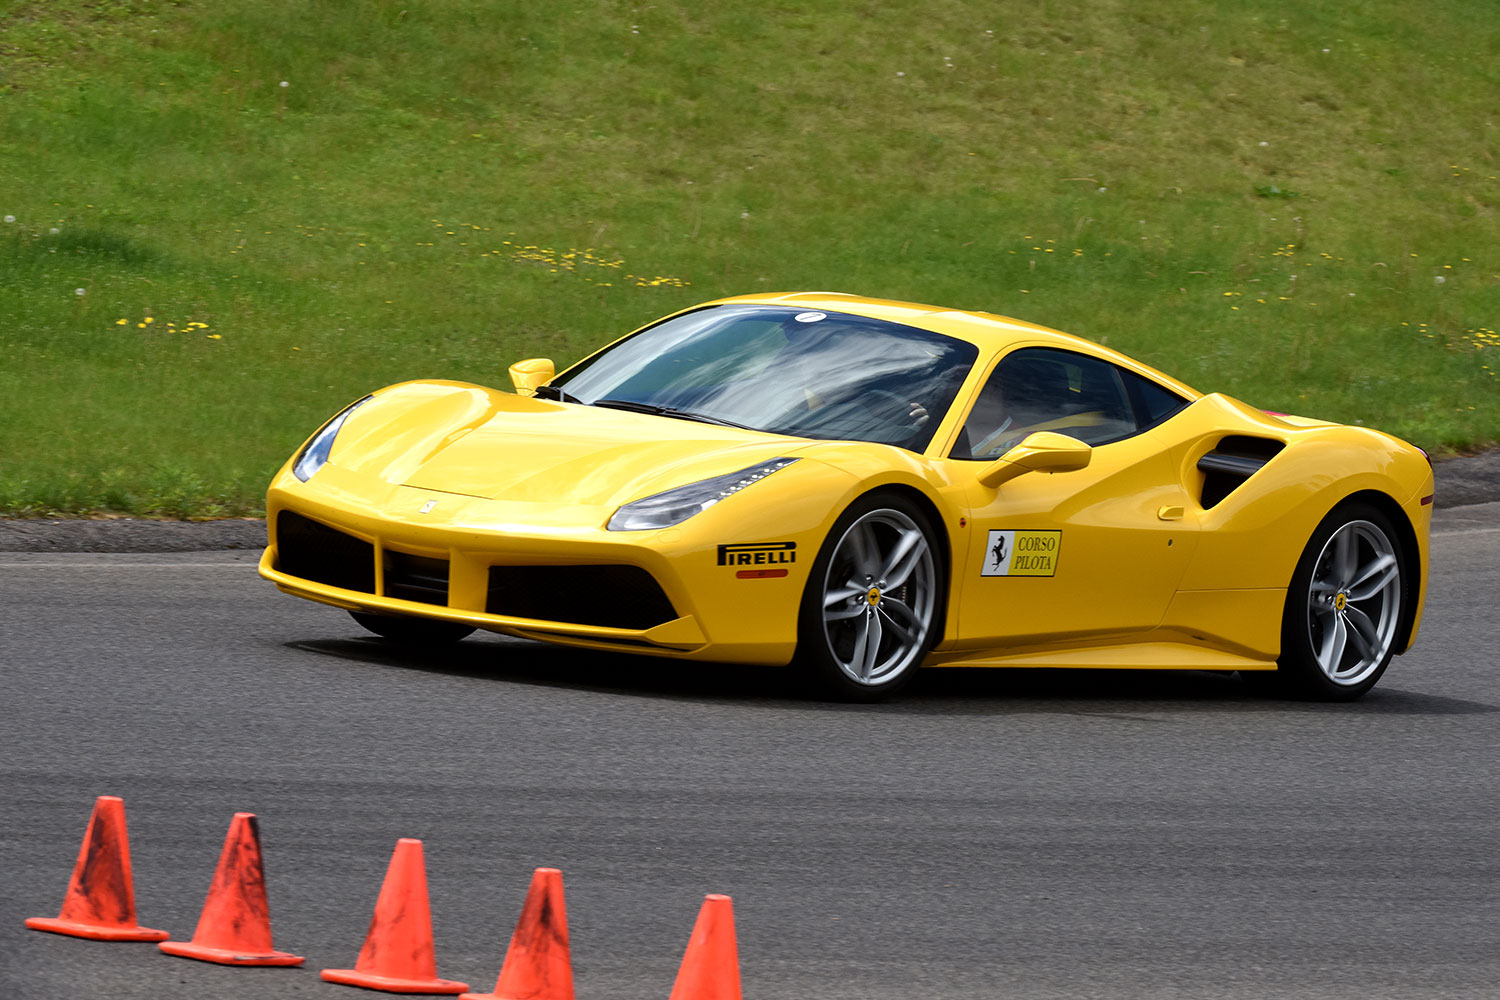 Ferrari Corso Pilota driving course